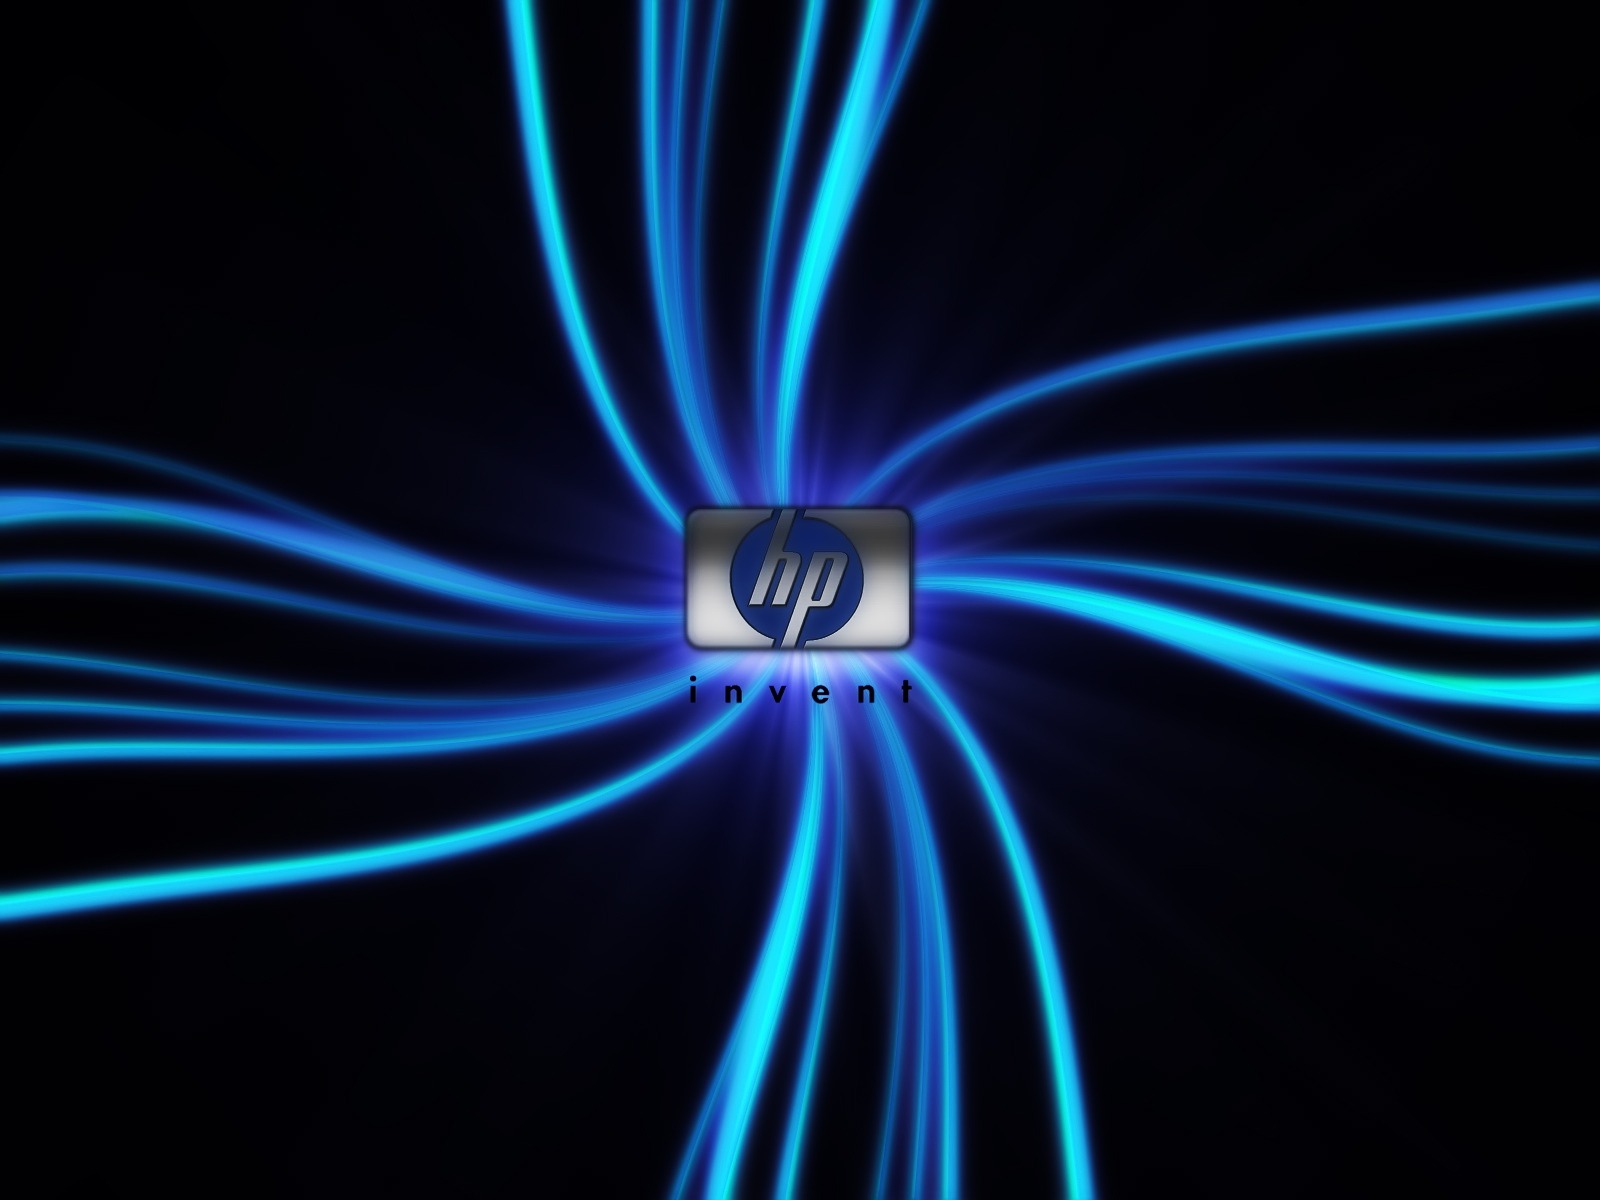 10 Top Hewlett Packard Hd Wallpapers Full Hd 1080p For Pc Background Hd Wallpaper Desktop Hp Laptop Hd Wallpapers For Laptop